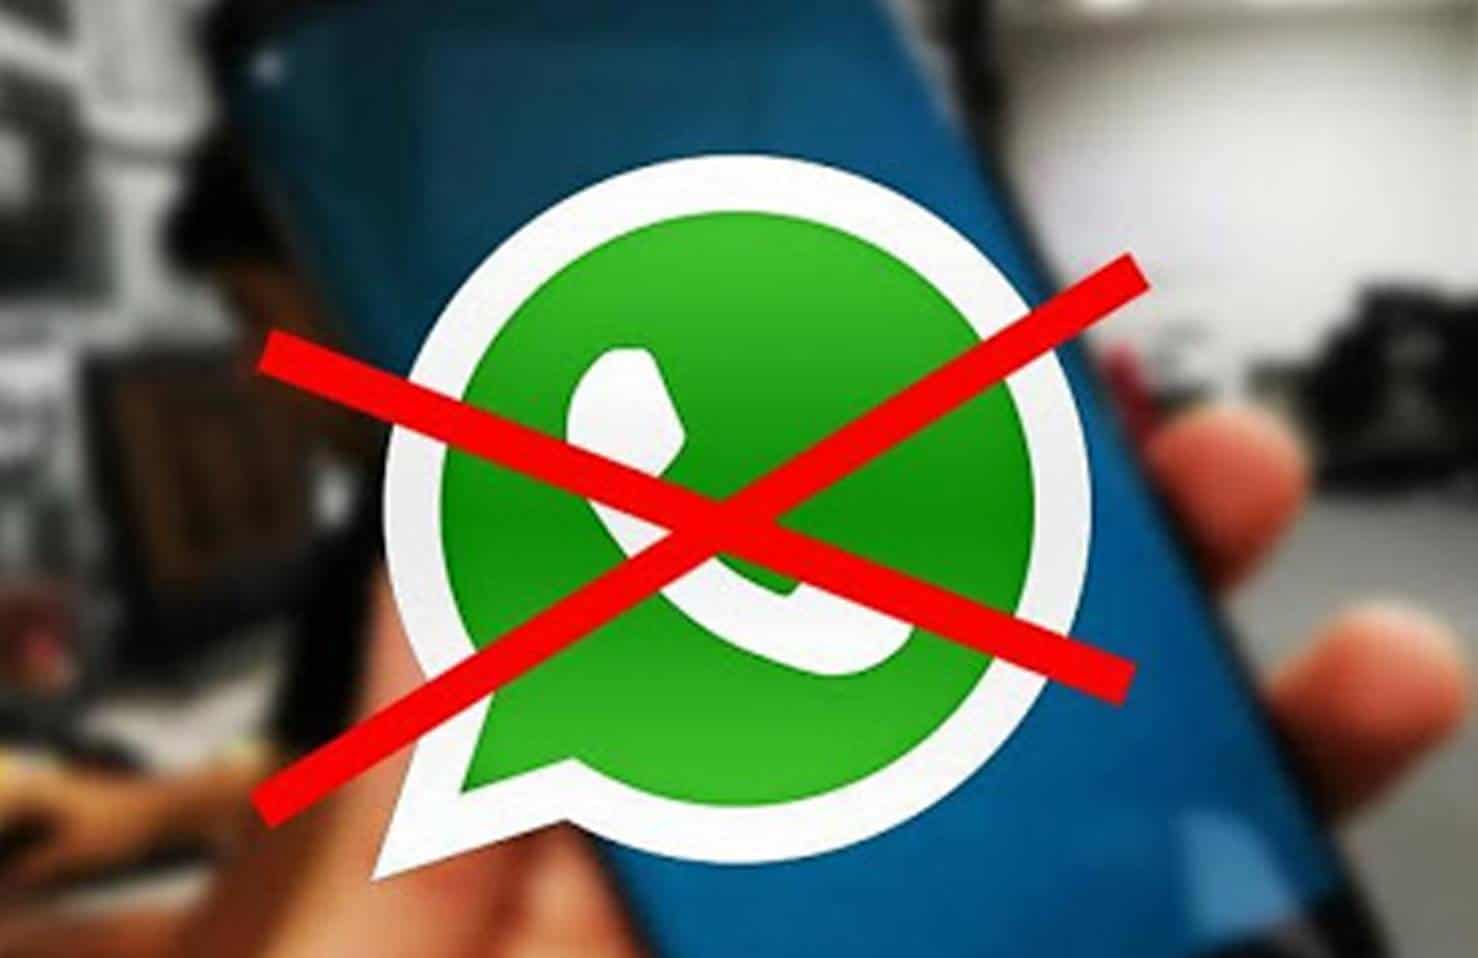 WhatsApp aplicativo